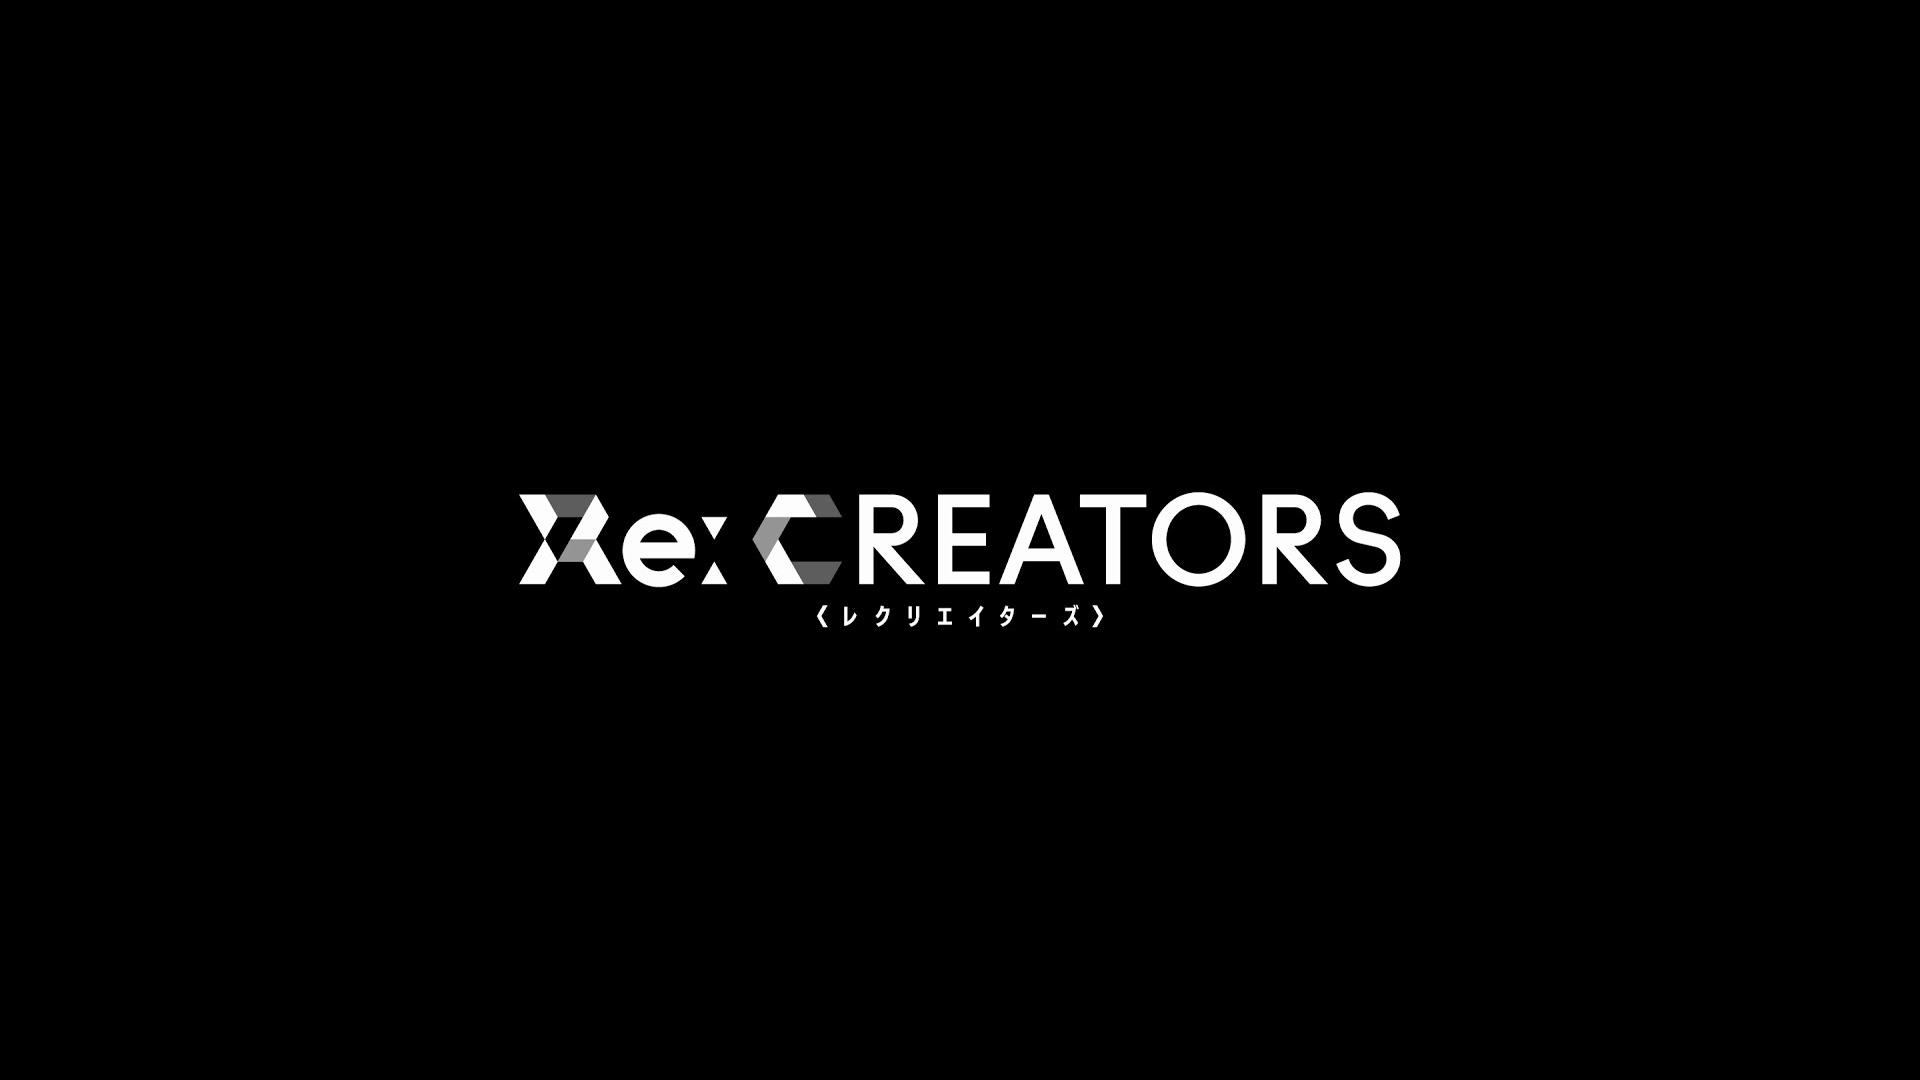 Re CREATORS Black Background Text Katakana Logo 1920x1080